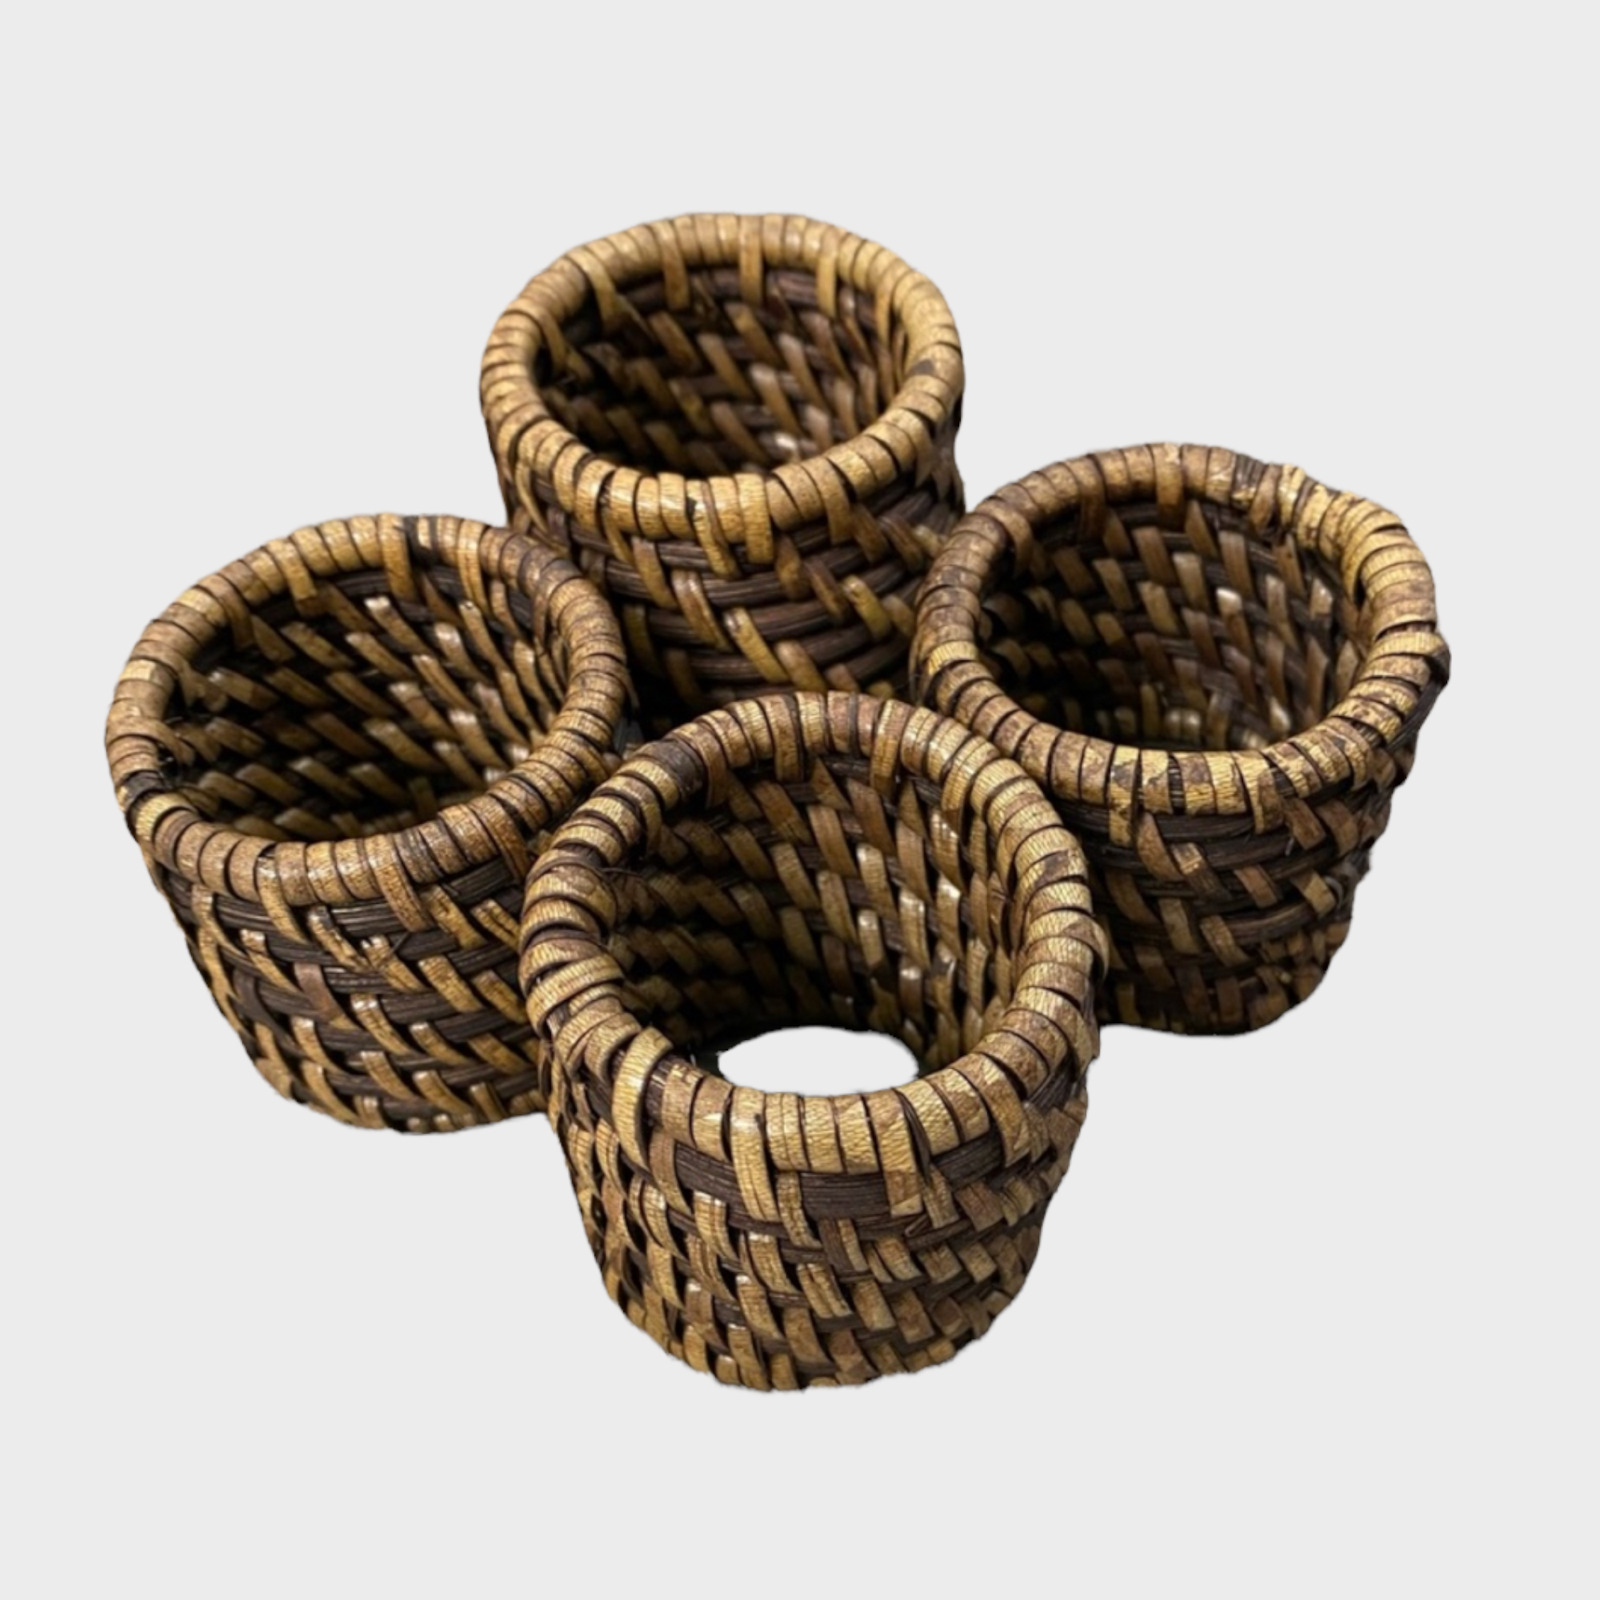 Napkin Rings Set of 4 Brown Weave